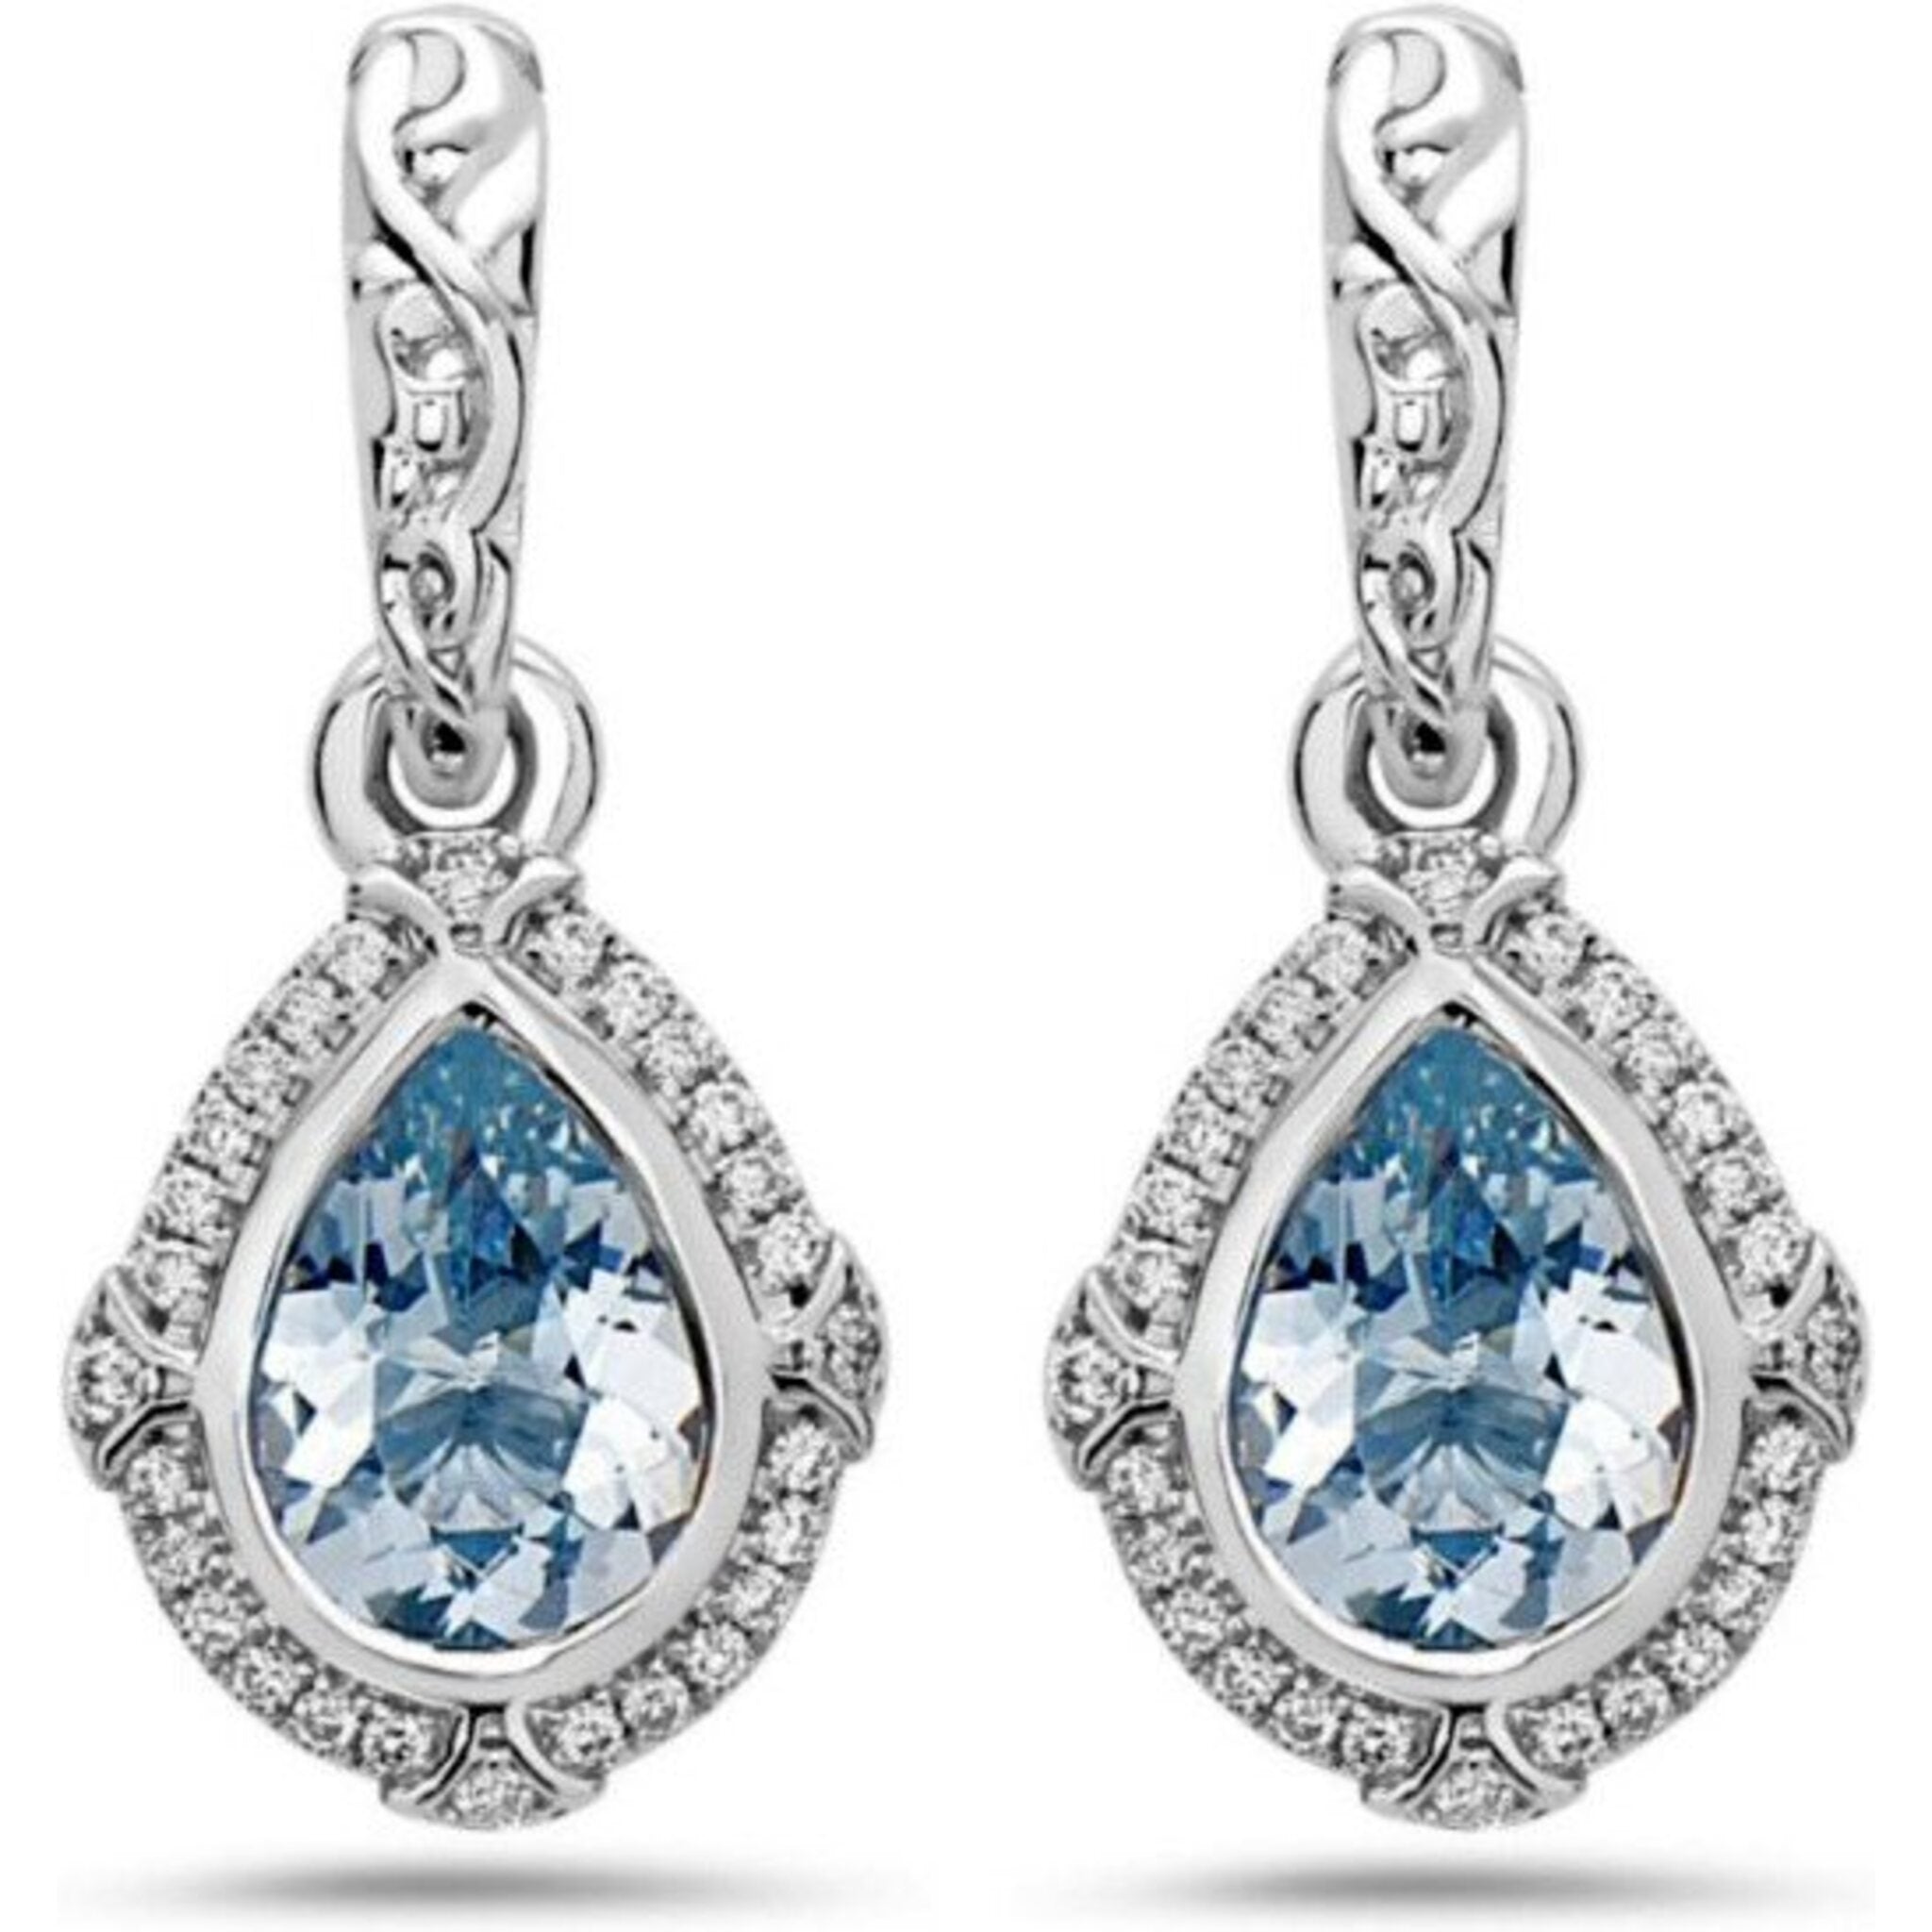 Charles Krypell - Pastel Diamond Classic Pear Shape Drop Earring - Aquamarine